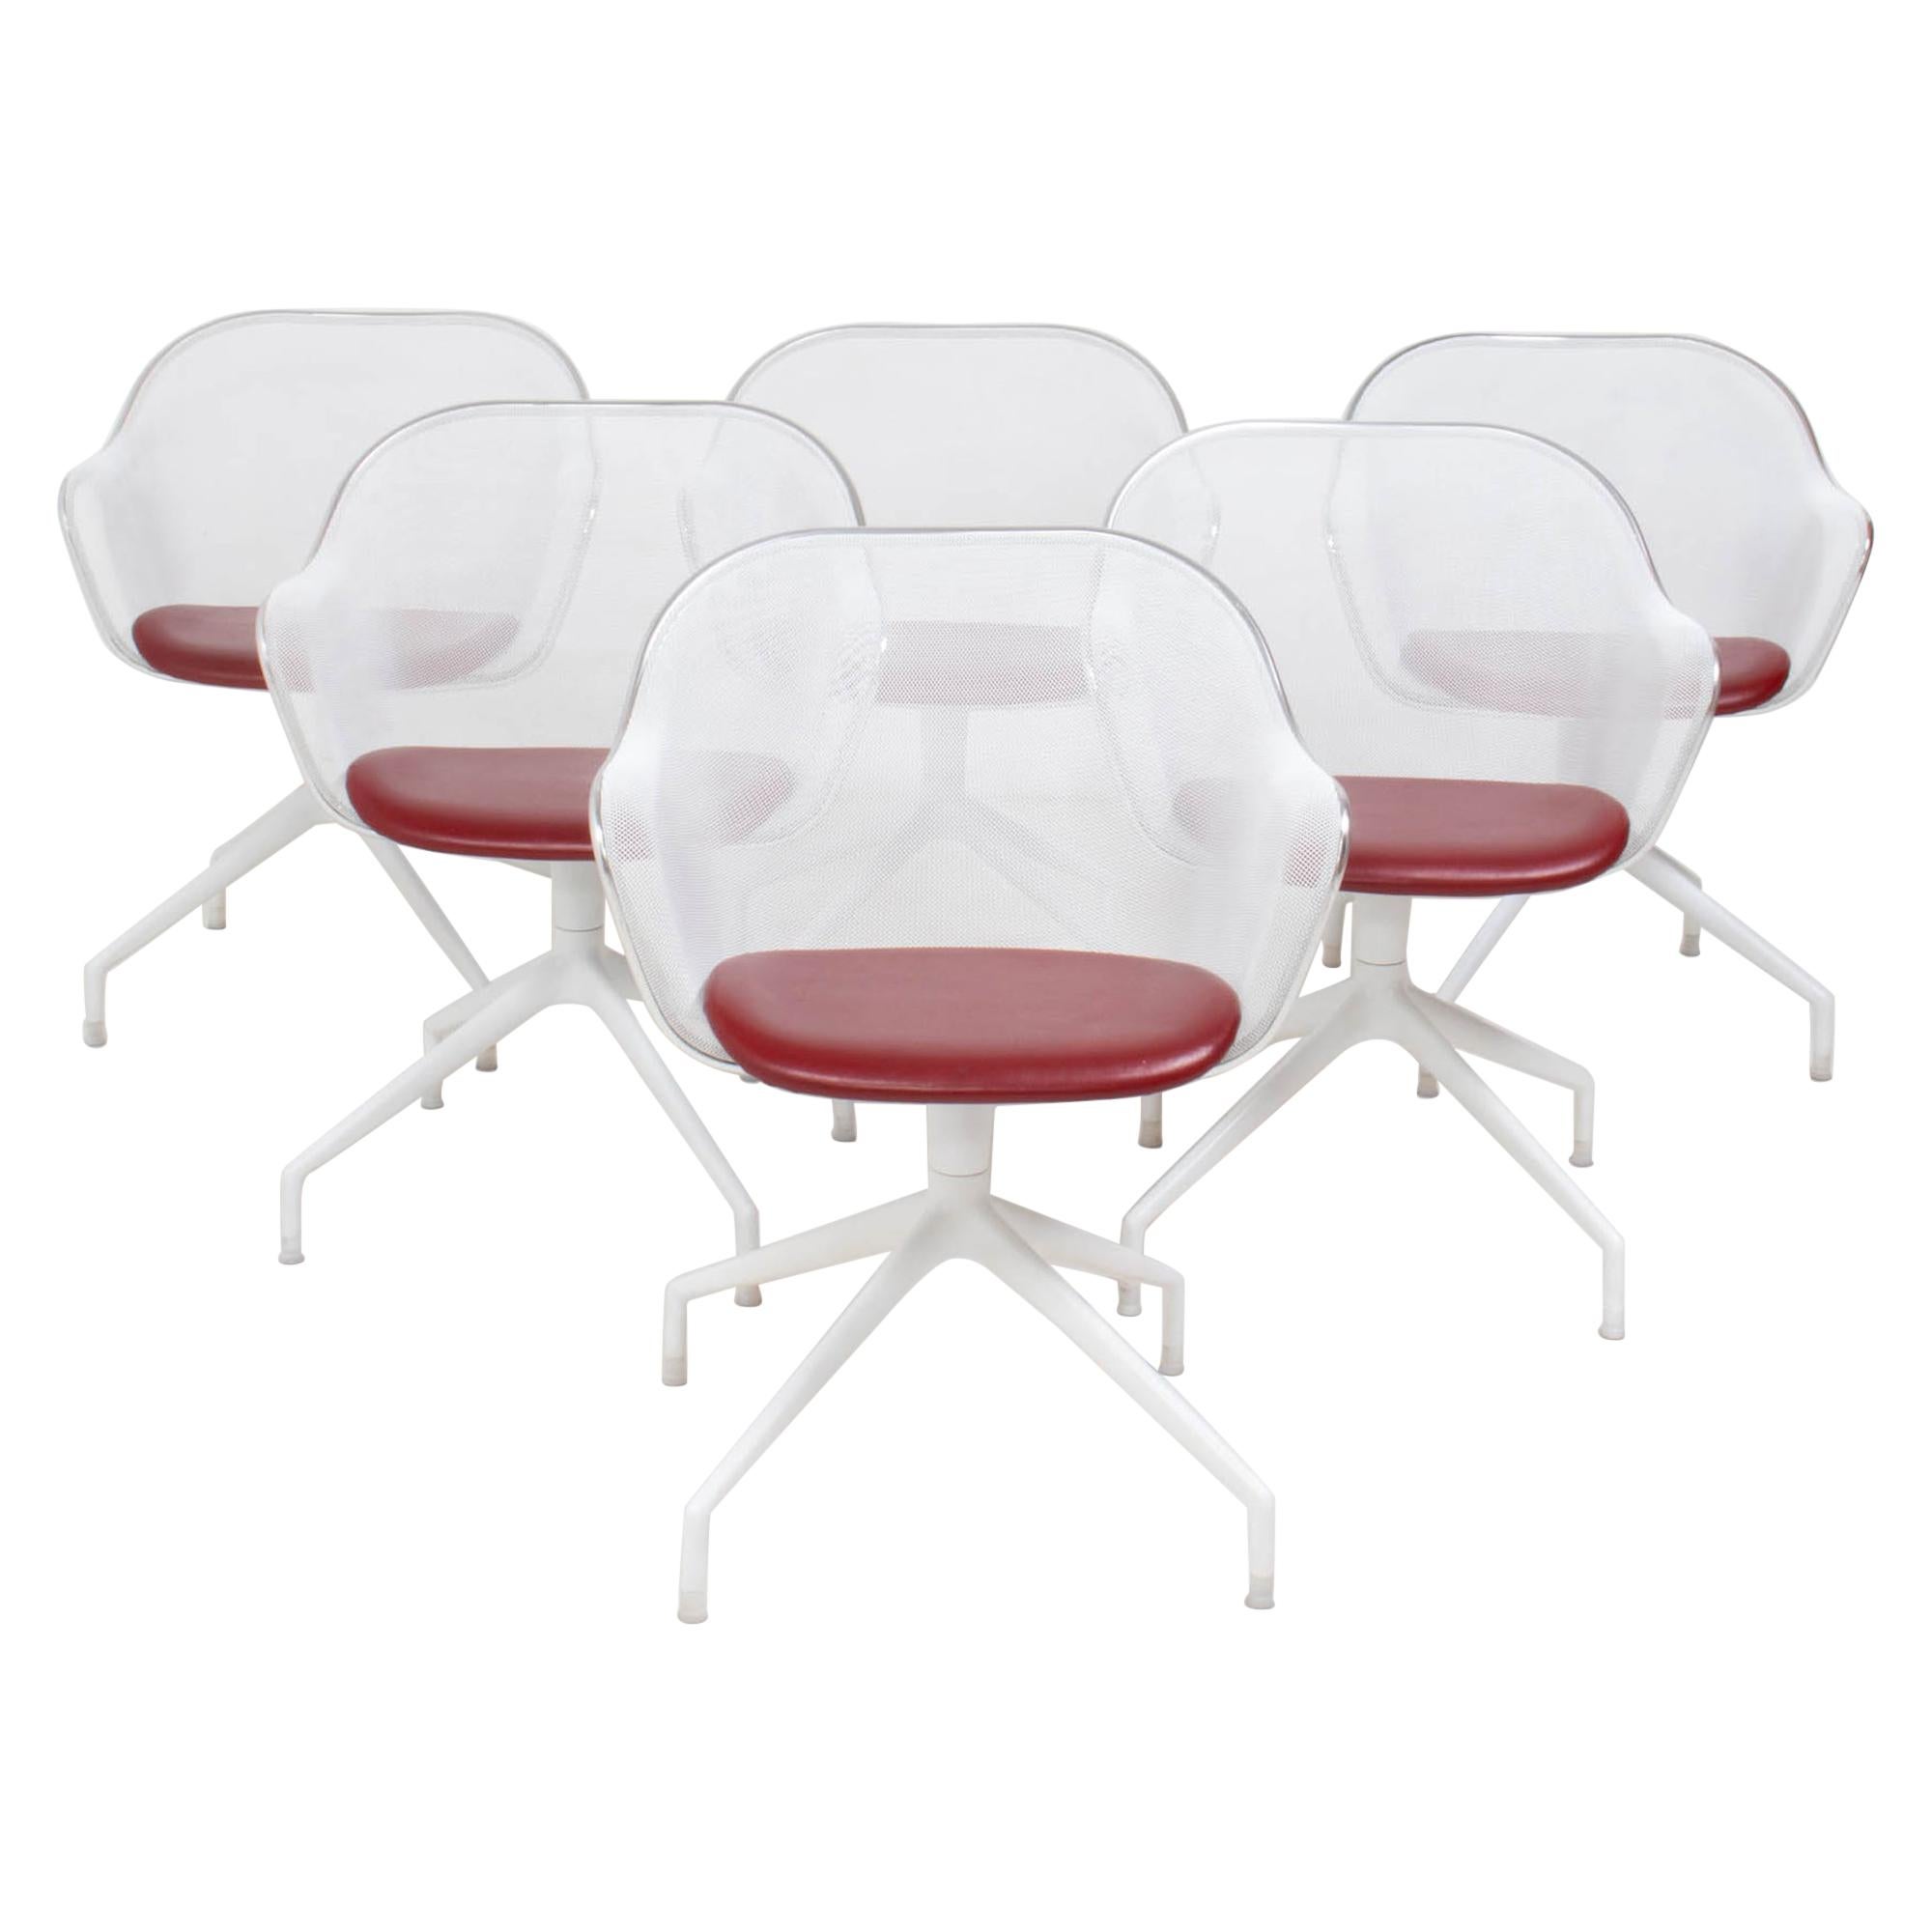 B&B Italia by Antonio Citterio Luta White & Red Leather Swivel Chairs, Set of 6